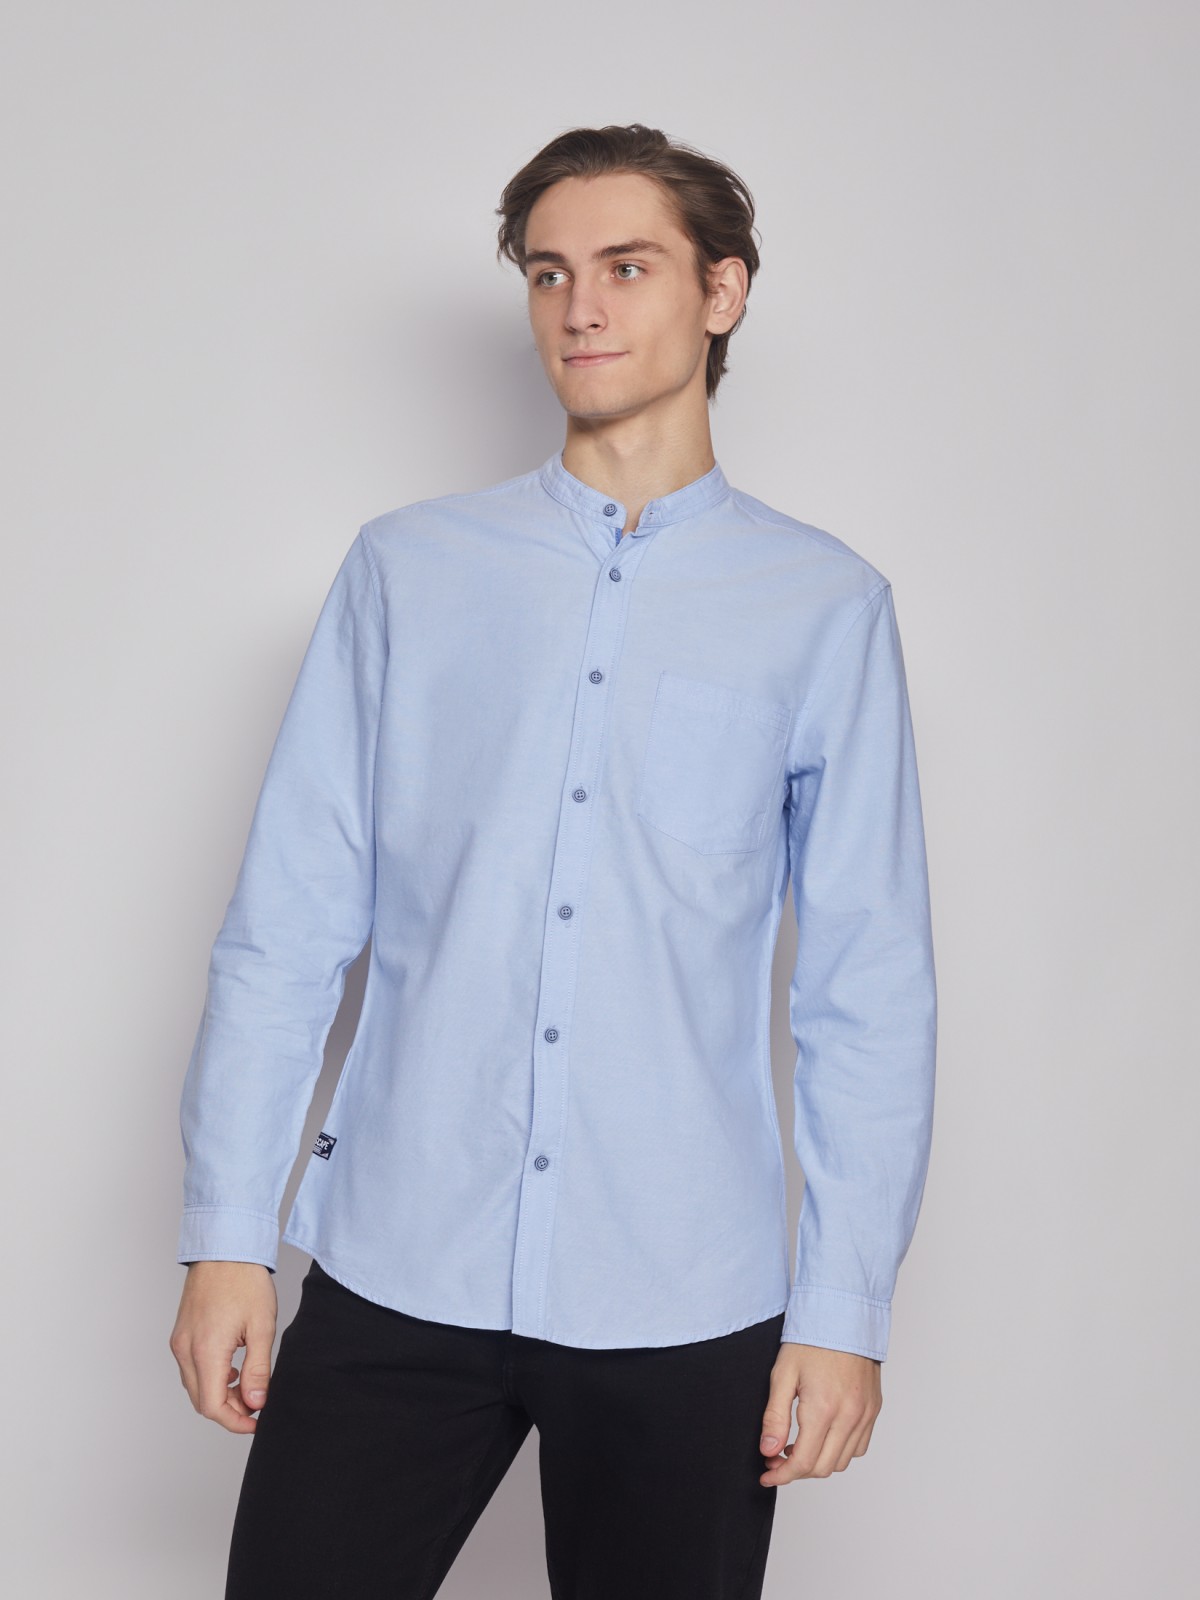 Хлопковая рубашка без воротника zolla 21312214R013, цвет светло-голубой, размер S - фото 3